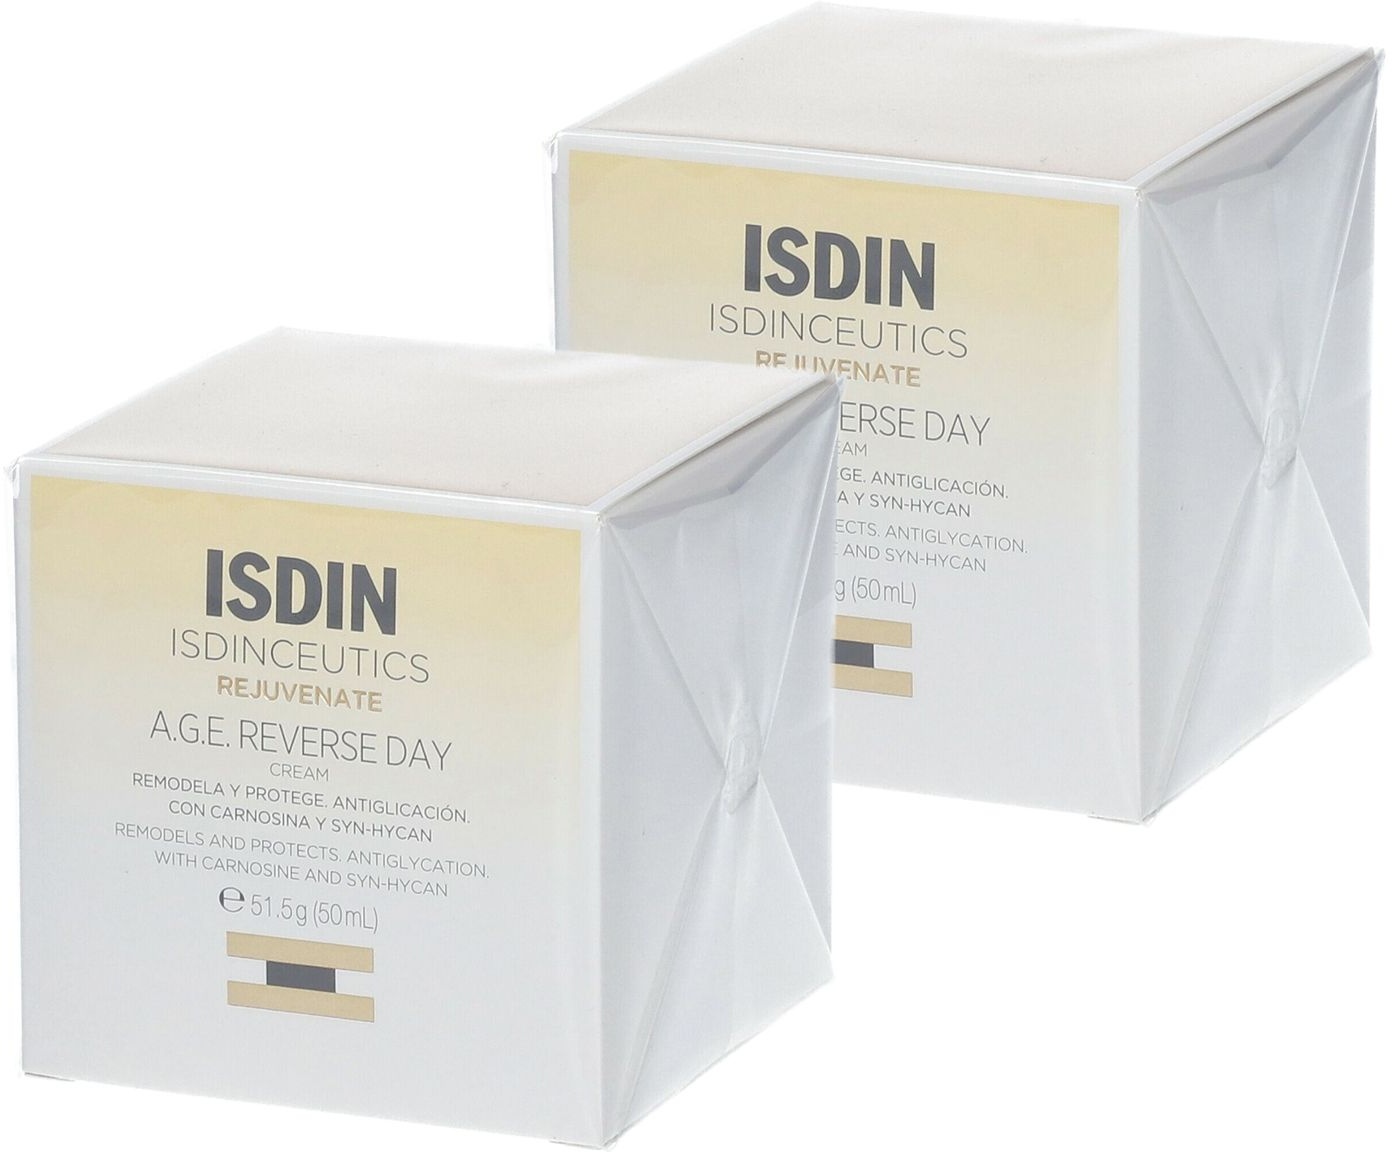 ISDIN Isdinceutics A.G.E. Reverse Day 2x50 ml crème